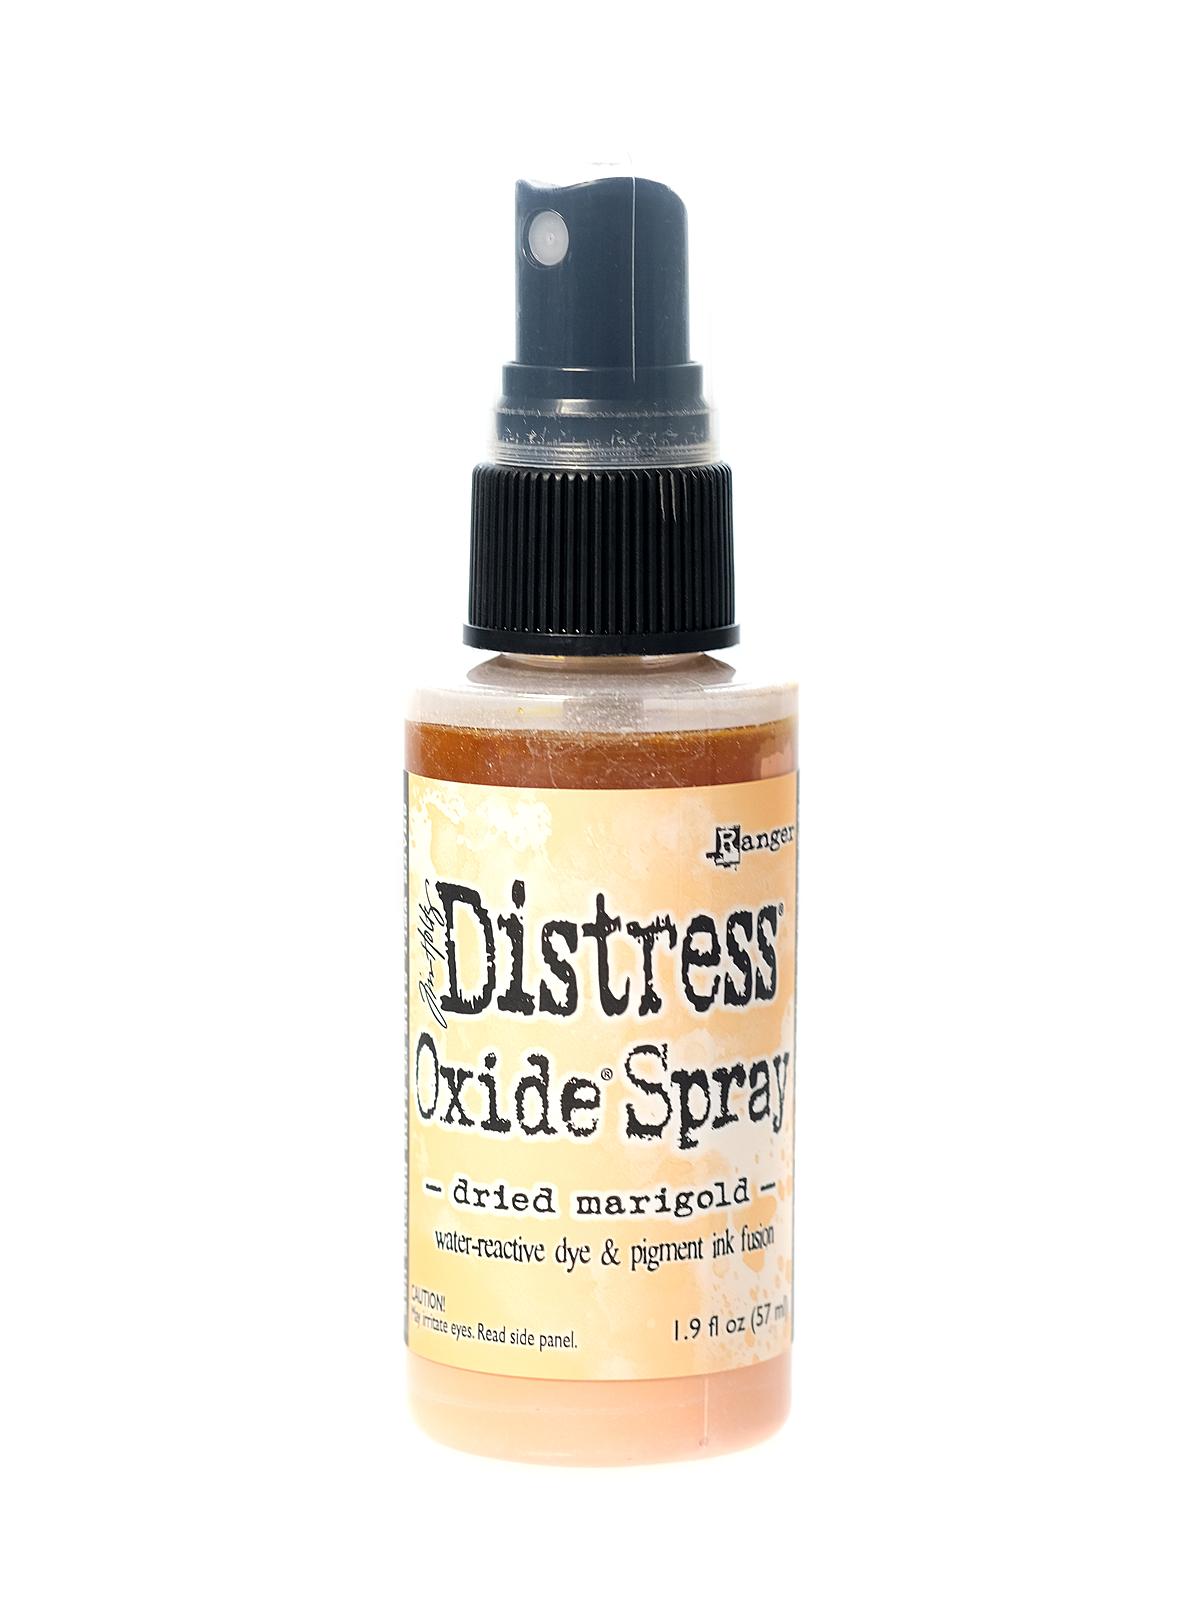 Tim Holtz Distress Oxide Sprays Dried Marigold 2 Oz. Bottle